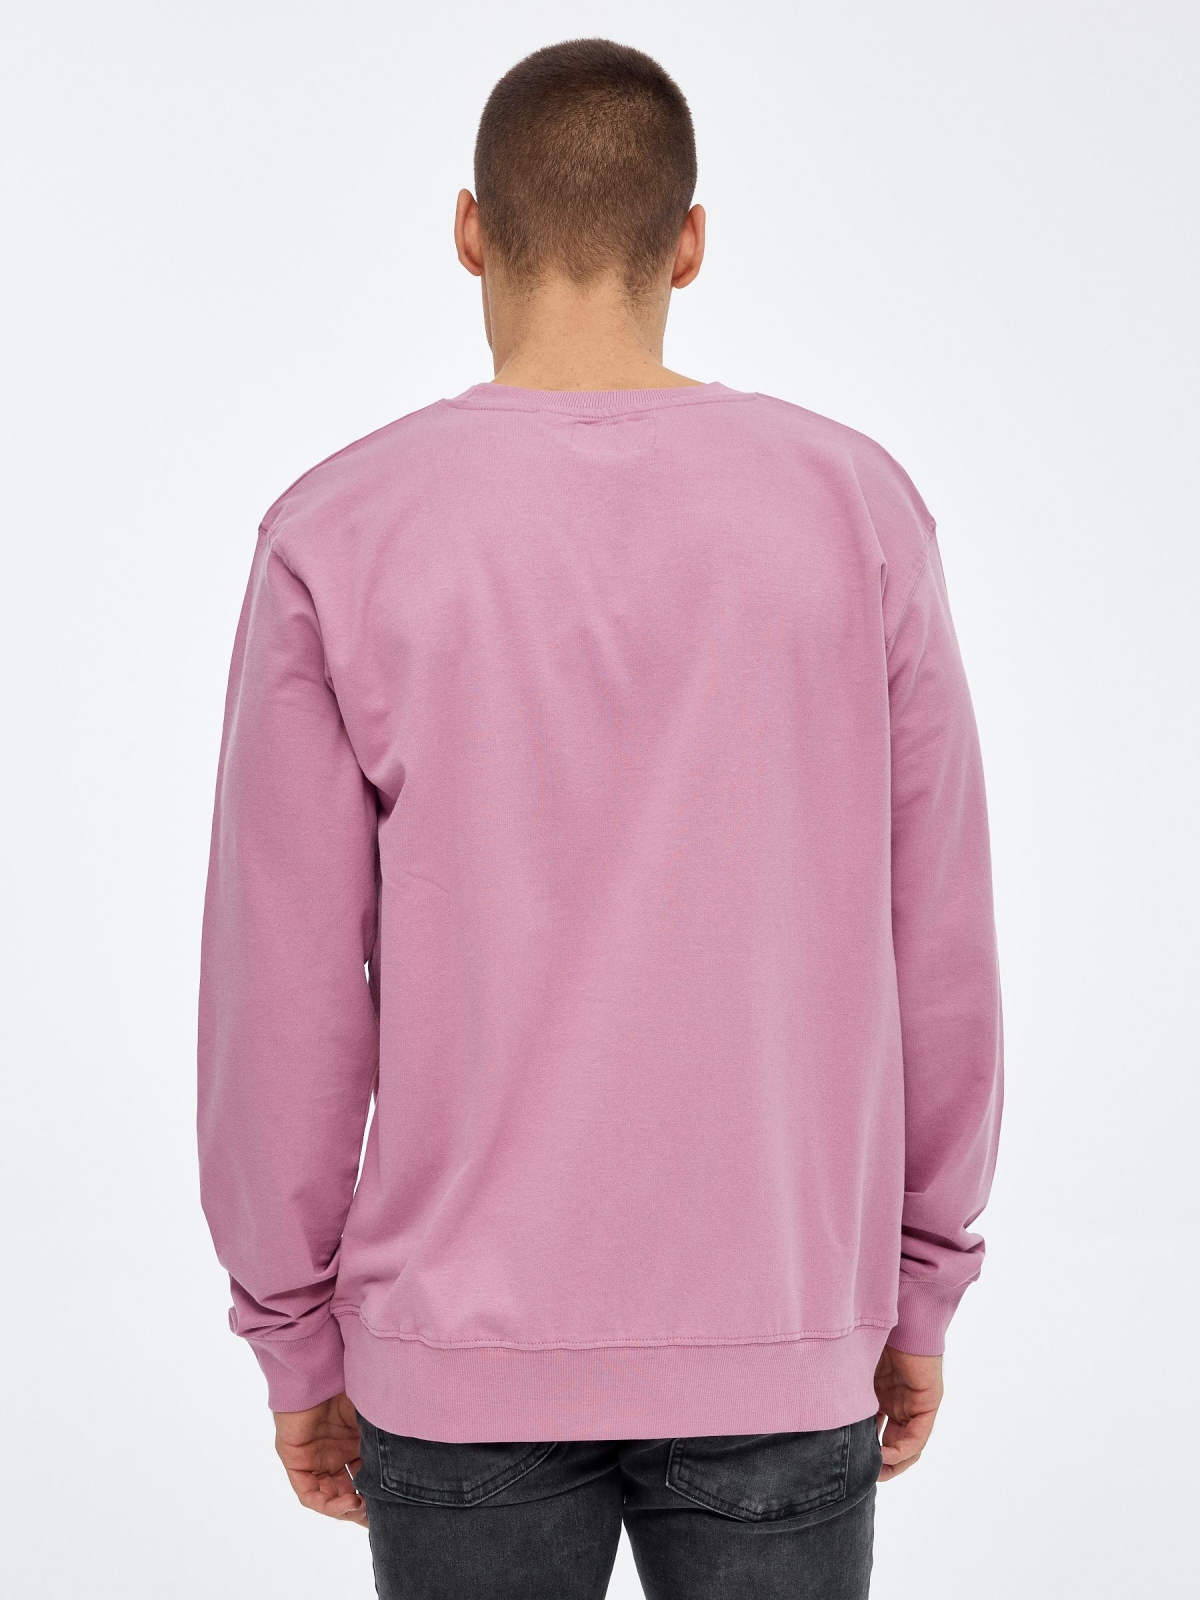 Enjoy Yourself basic Sweatshirt pink middle back view